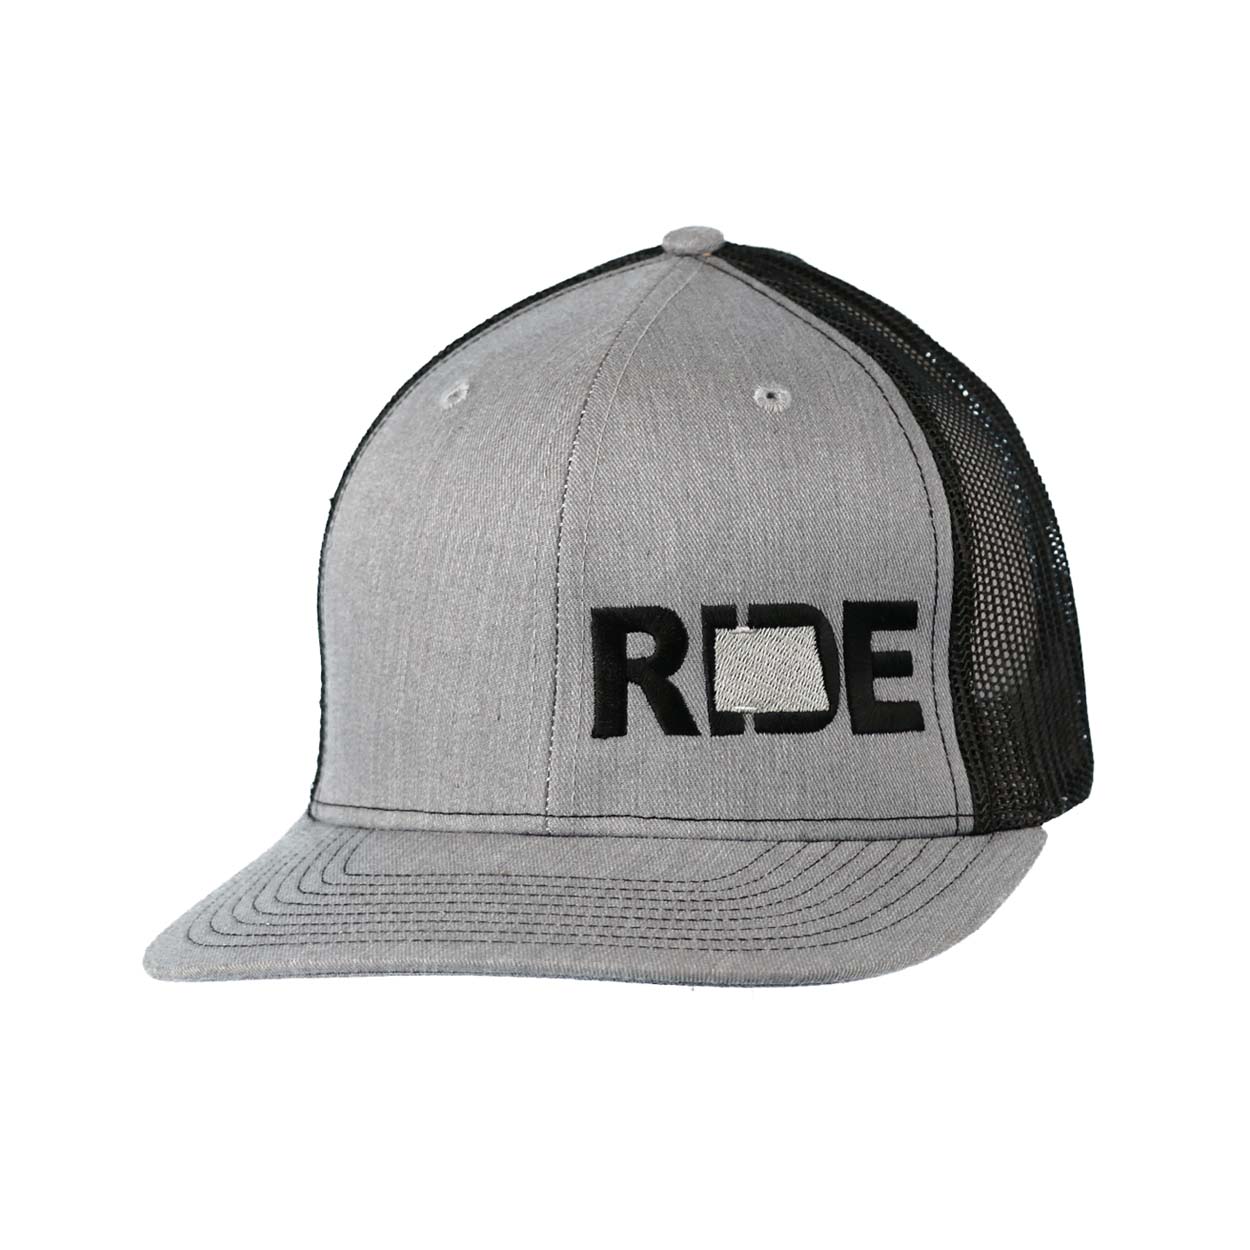 Ride North Dakota Classic Pro Night Out Embroidered Snapback Trucker Hat Heather Gray/Black